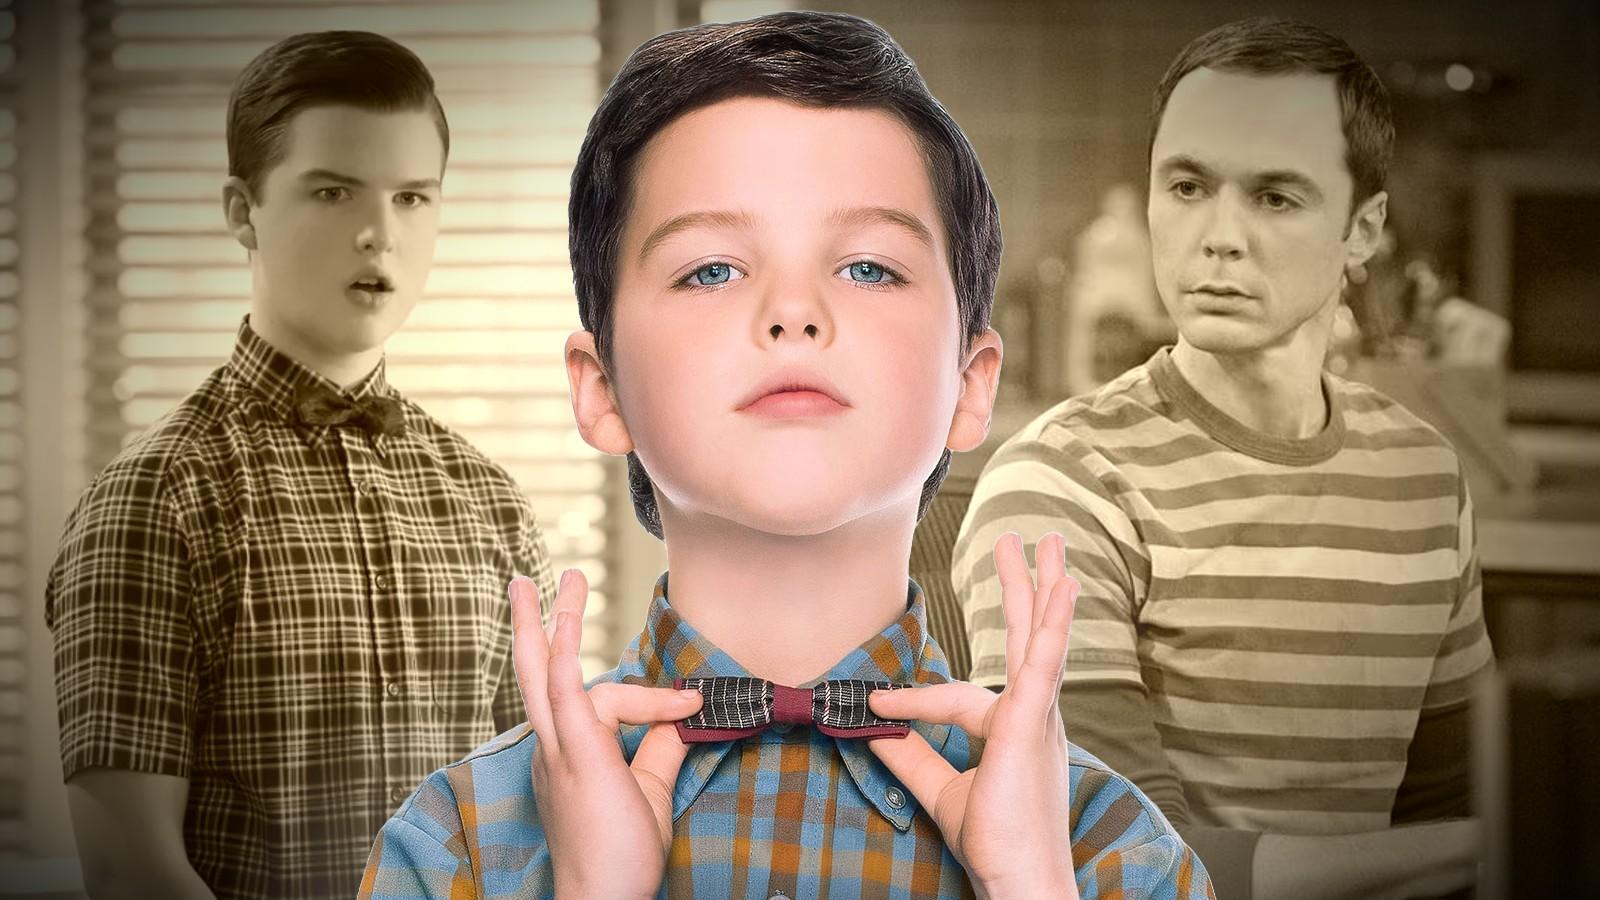 Sheldon in Young Sheldon and The Big Bang Theory